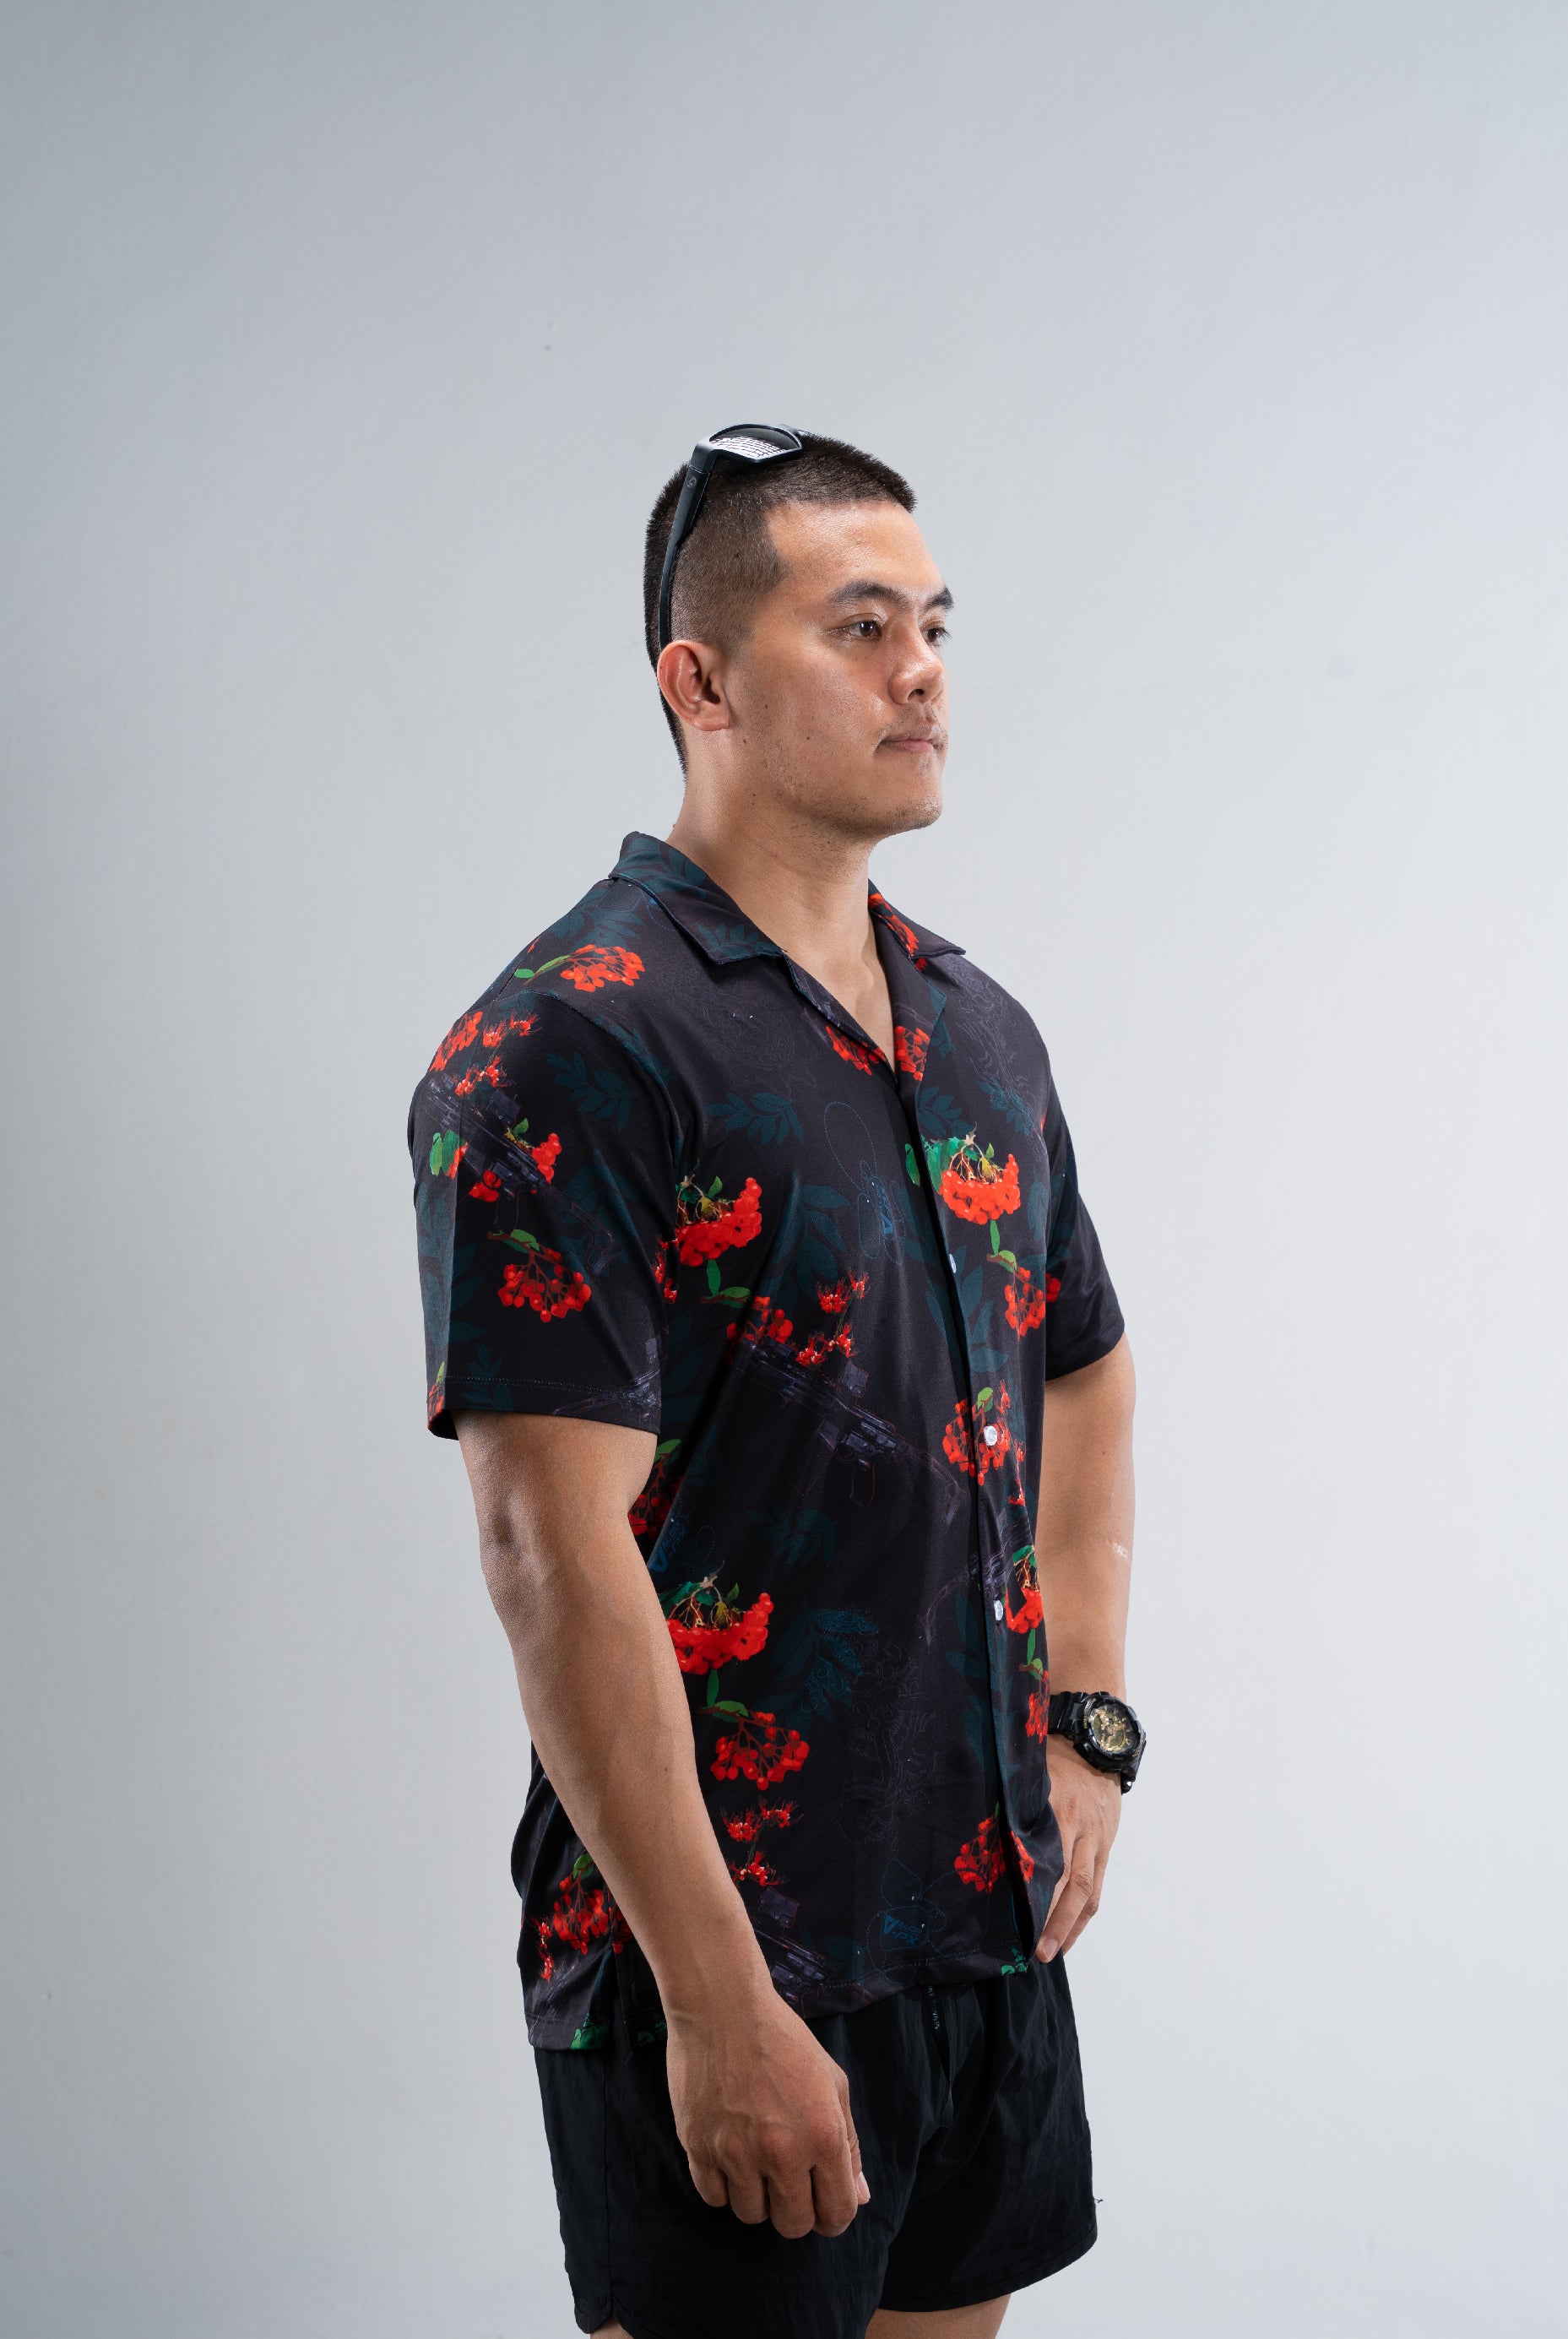 Valor PX-Hawaii-Shirt หนุมาน MCX [DARK GRAY]